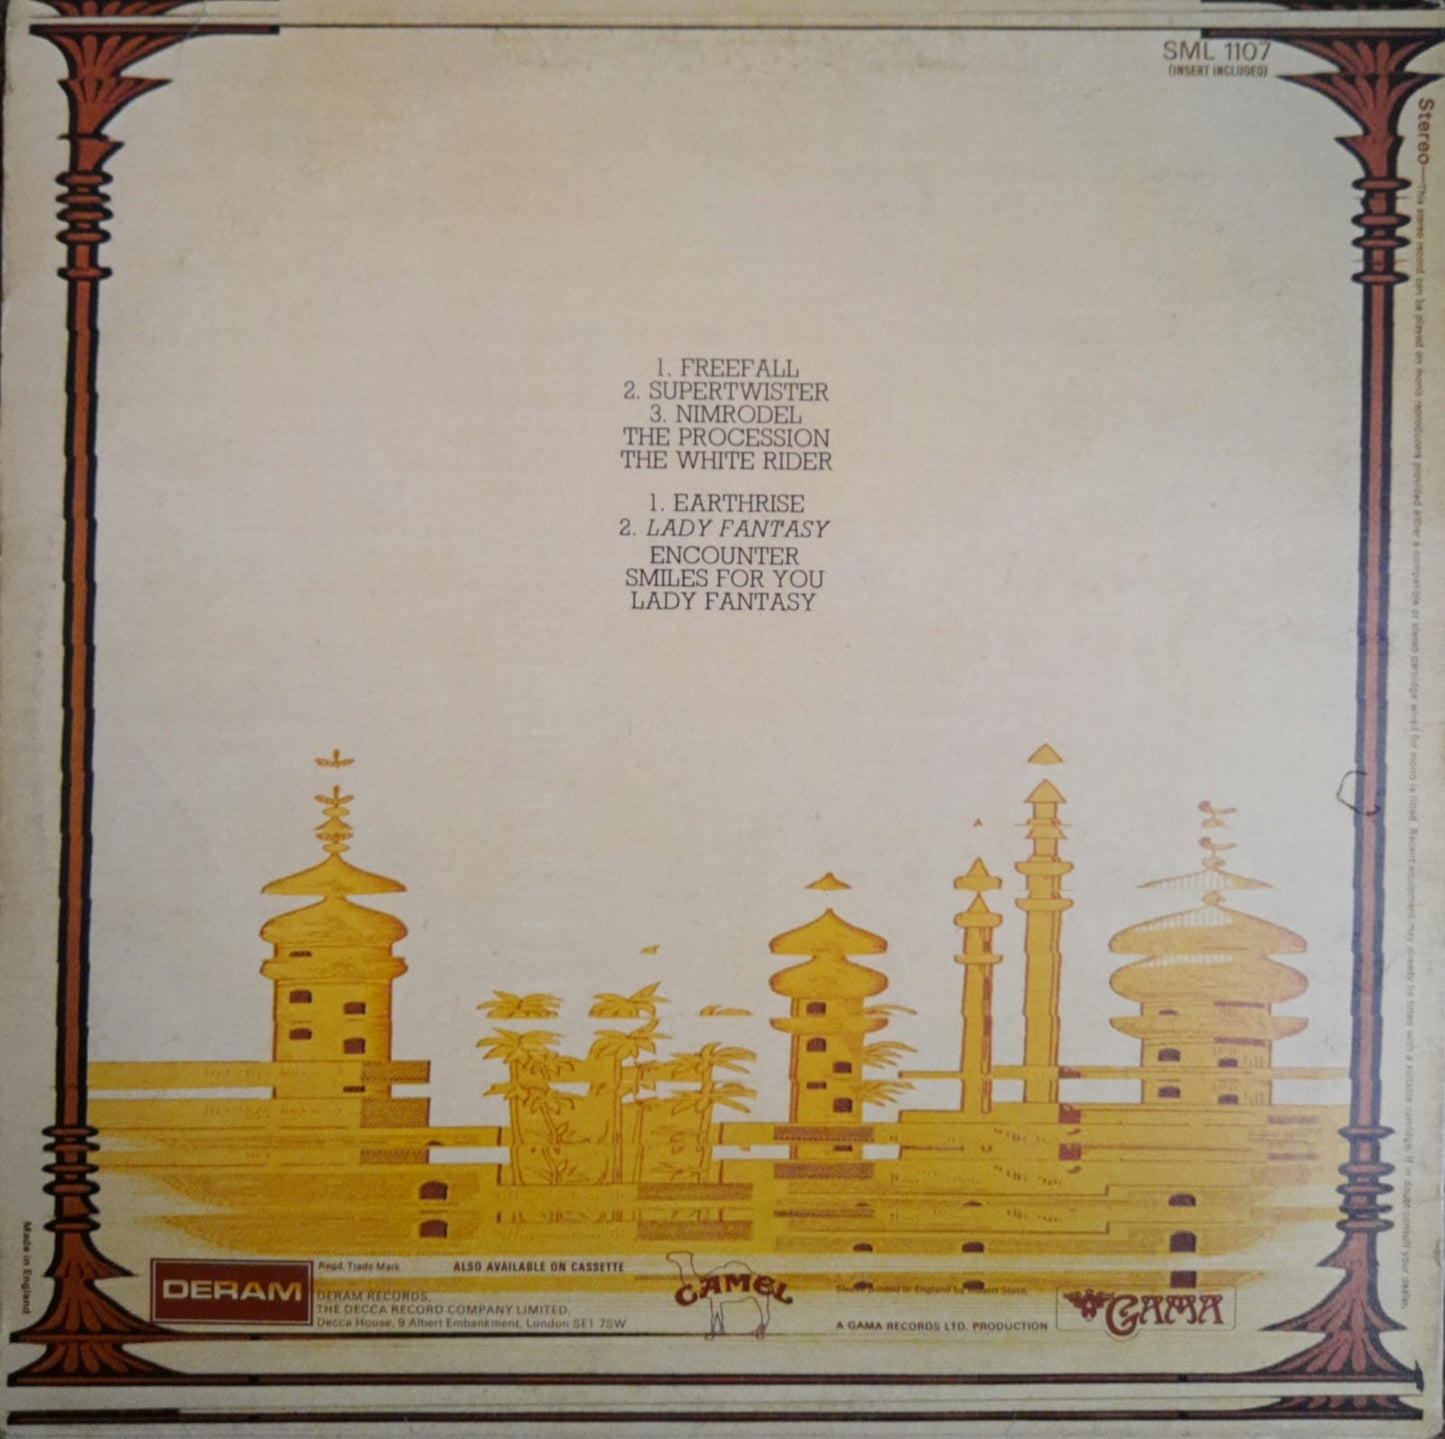 Camel - Mirage (LP, Reino Unido, 1974)